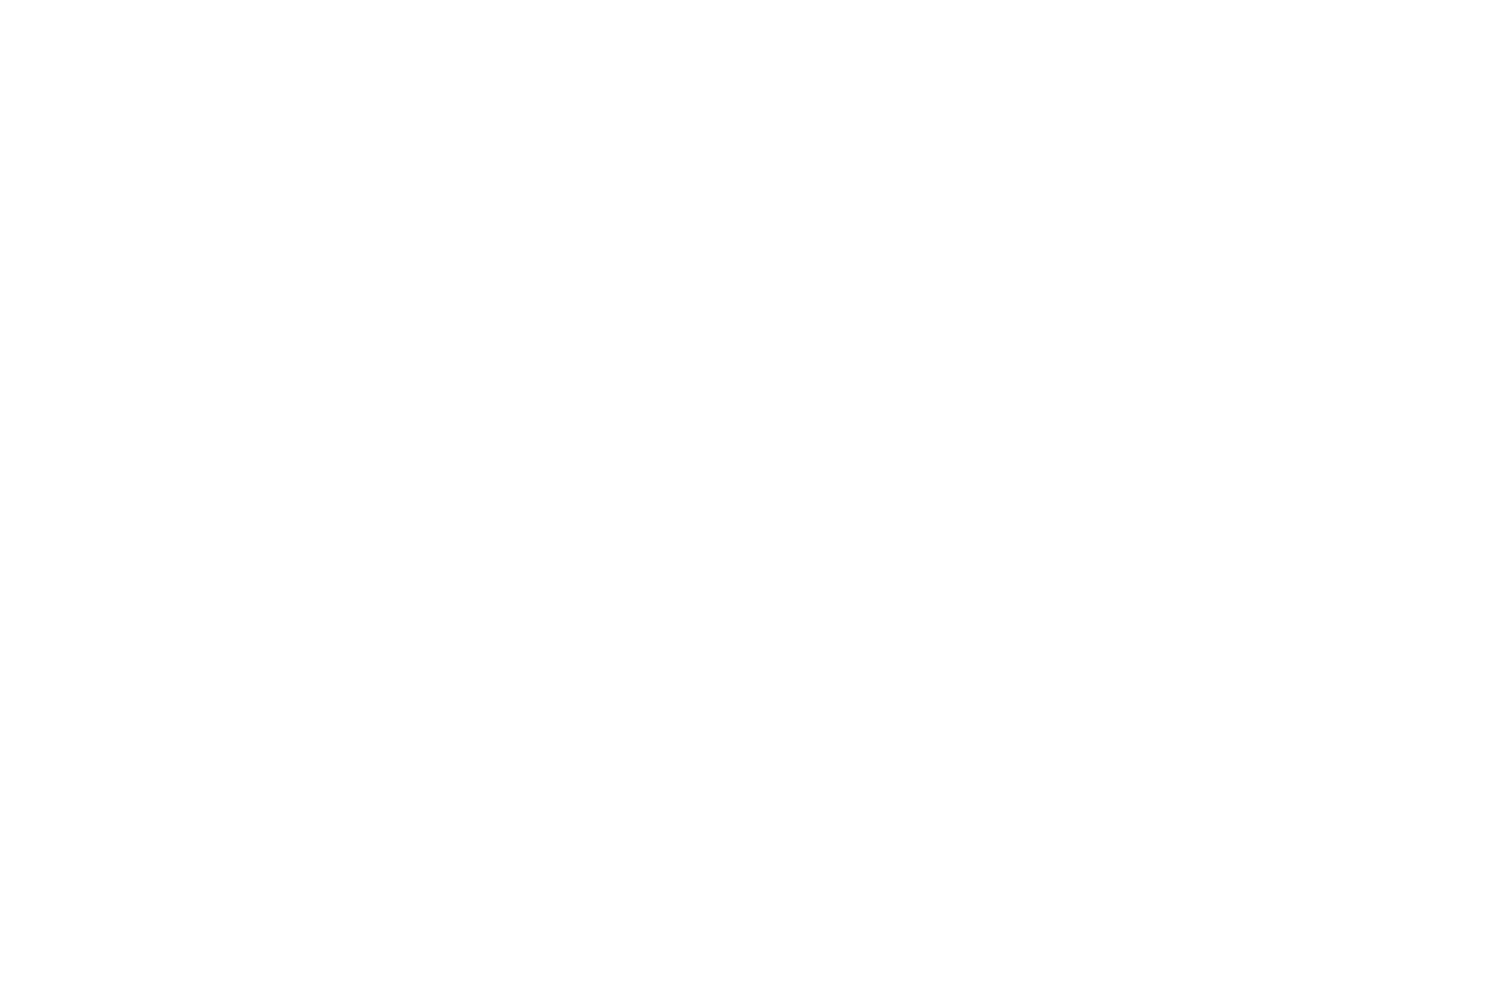 Перекресток проспекта Маршала Жукова и проспекта Стачек Источник: материалы сайта «Съемка с квадрокоптера» https://pilothub.ru/ 